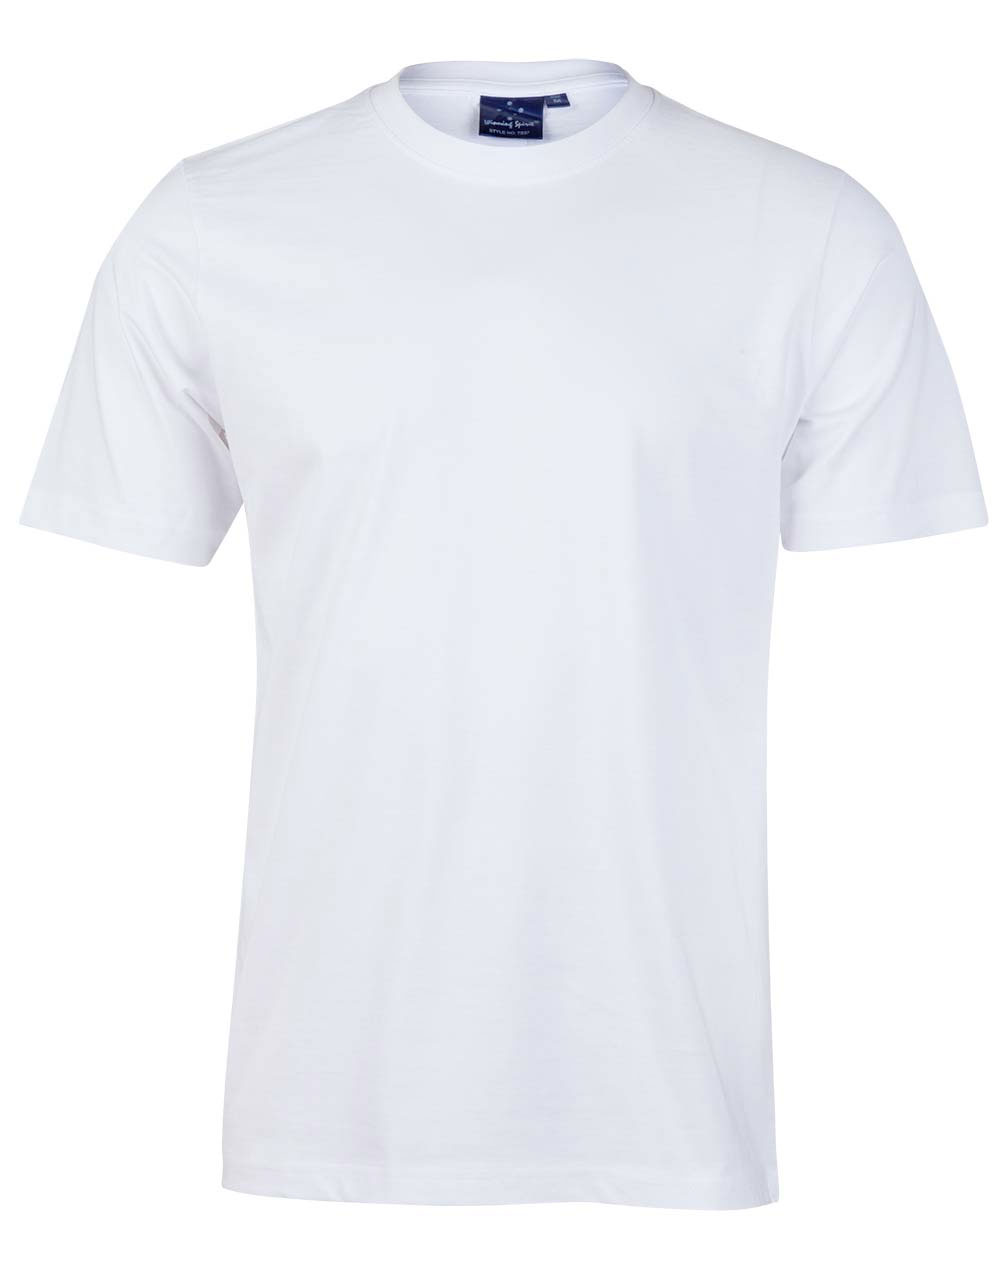 Custom Made Budget Unisex Crew Neck T-Shirts Mens Online Perth Australia